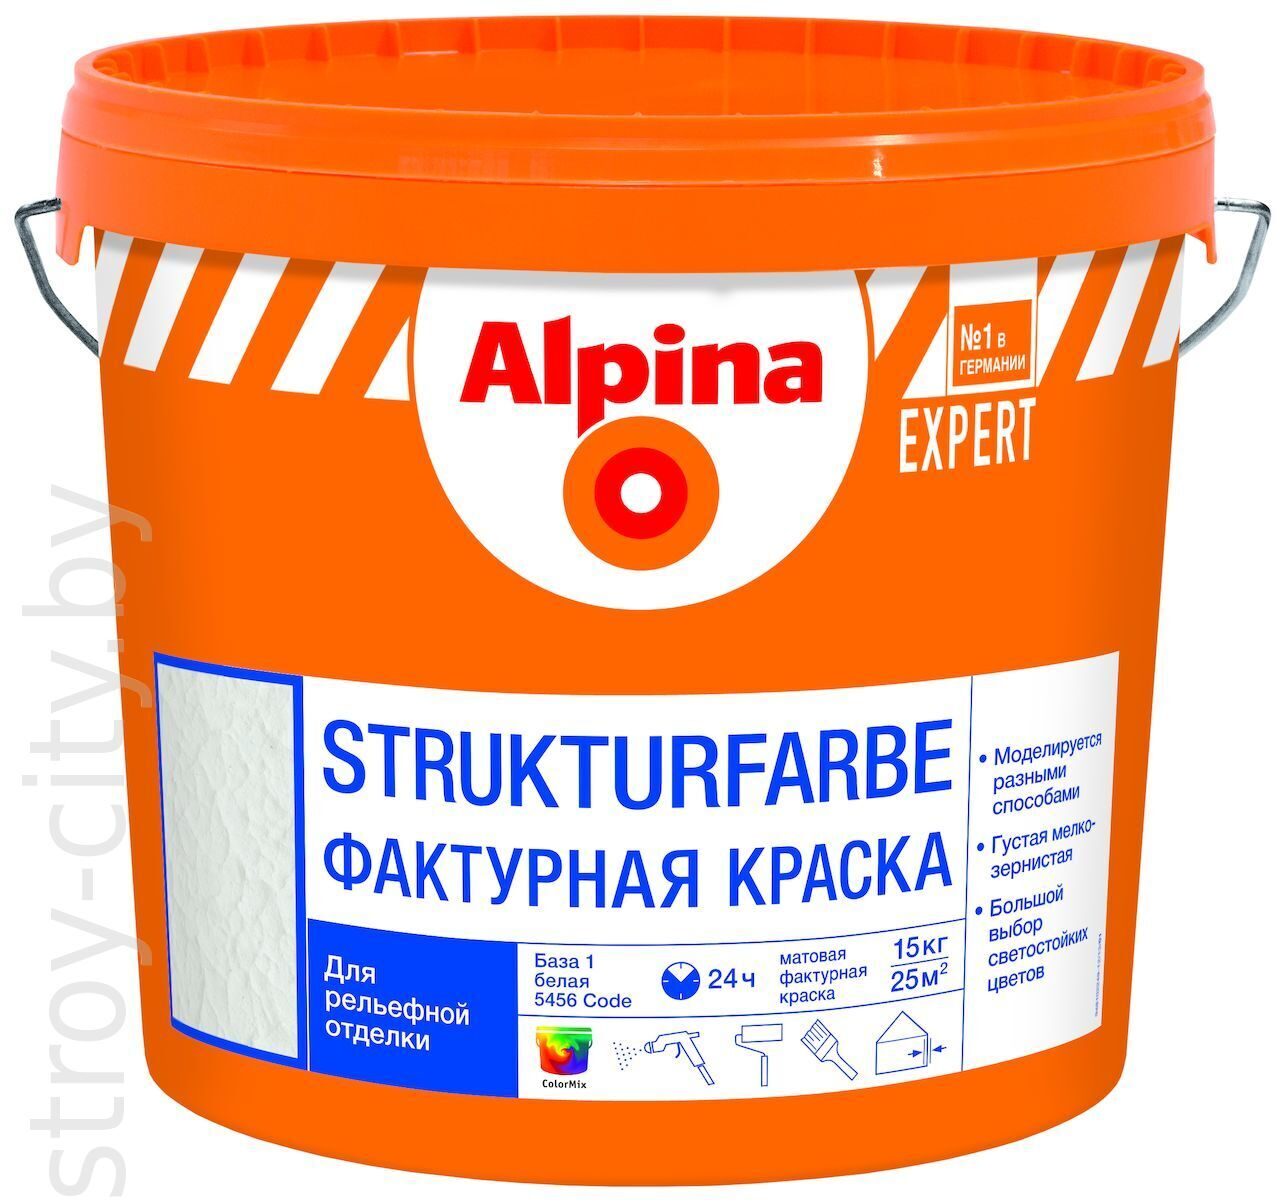 Универсальная фактурная краска Alpina Expert Strukturfarbe, 15кг